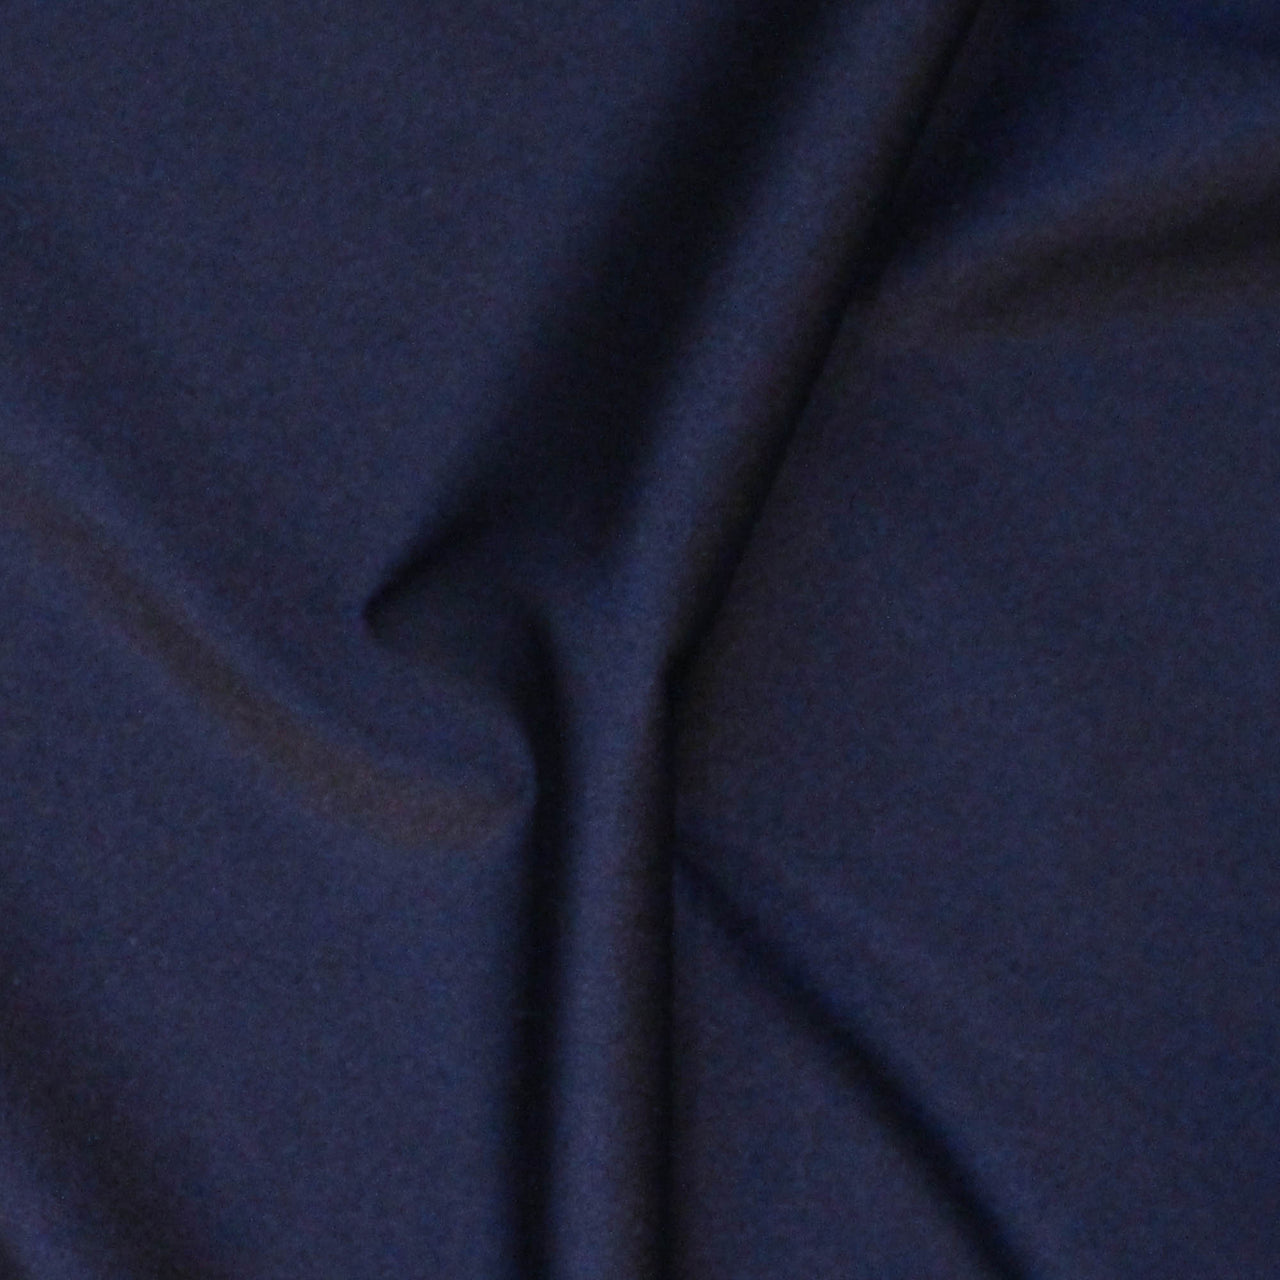 Navy Blue - Nylon Spandex Fabric - 4 Way All Way Stretch Superior Quality - Leotards, Dancewear